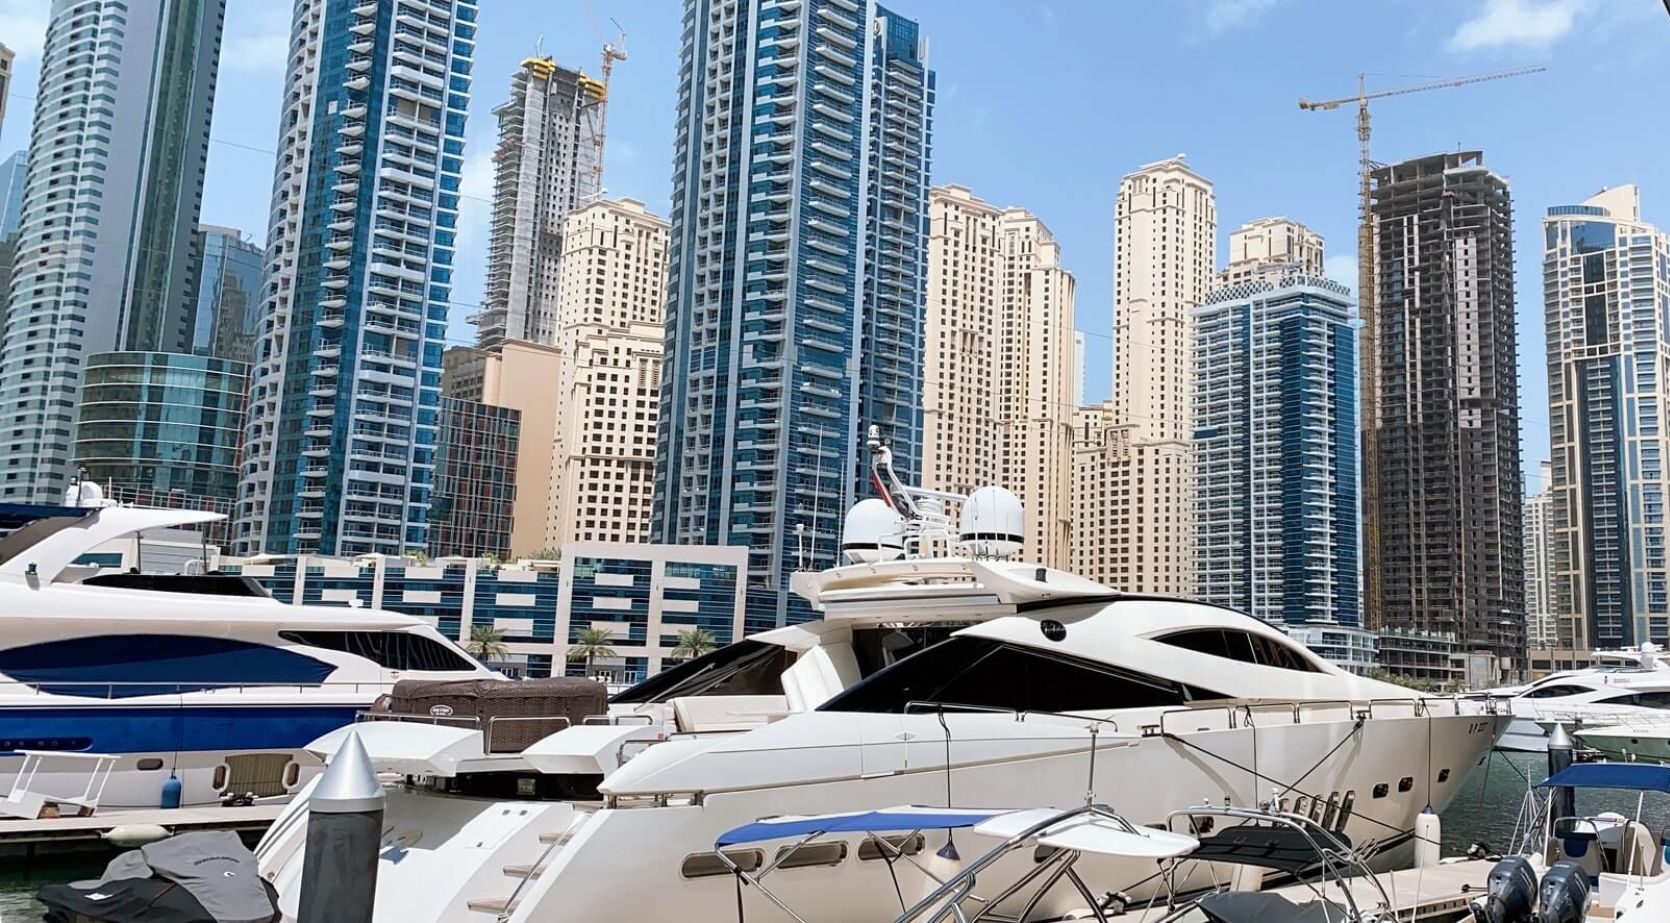 Yacht at Dubai marina